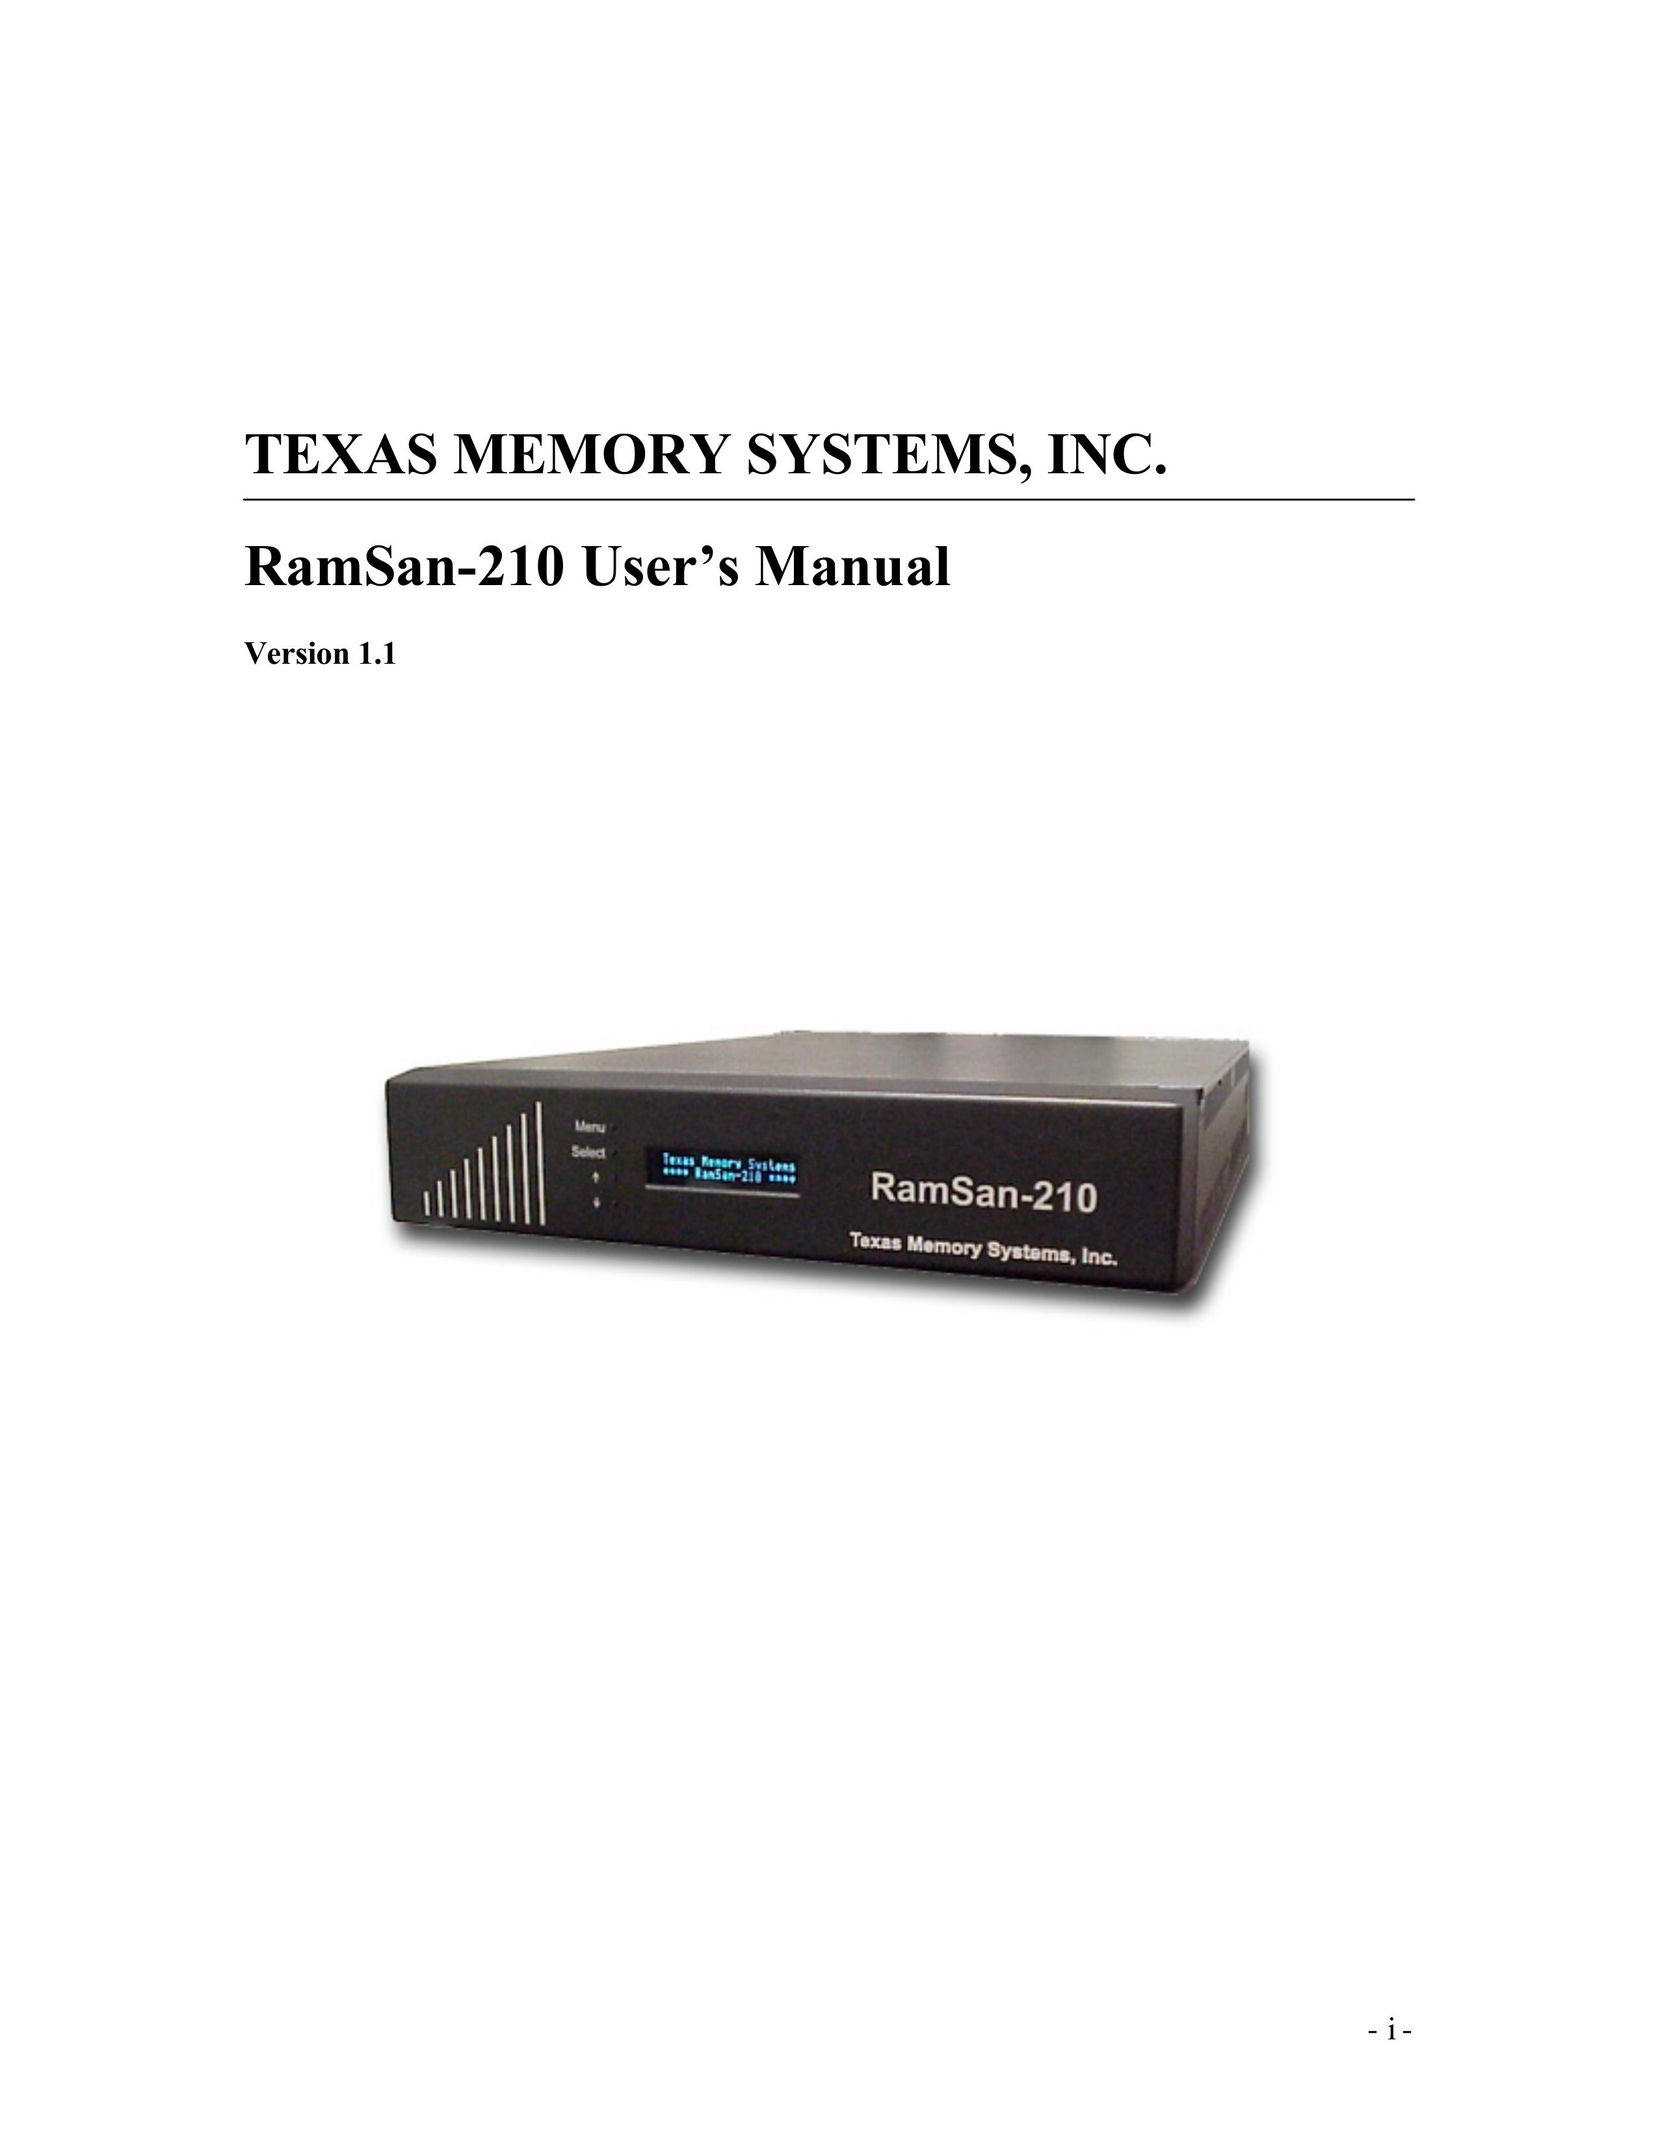 Texas Memory Systems RamSam-210 Computer Drive User Manual